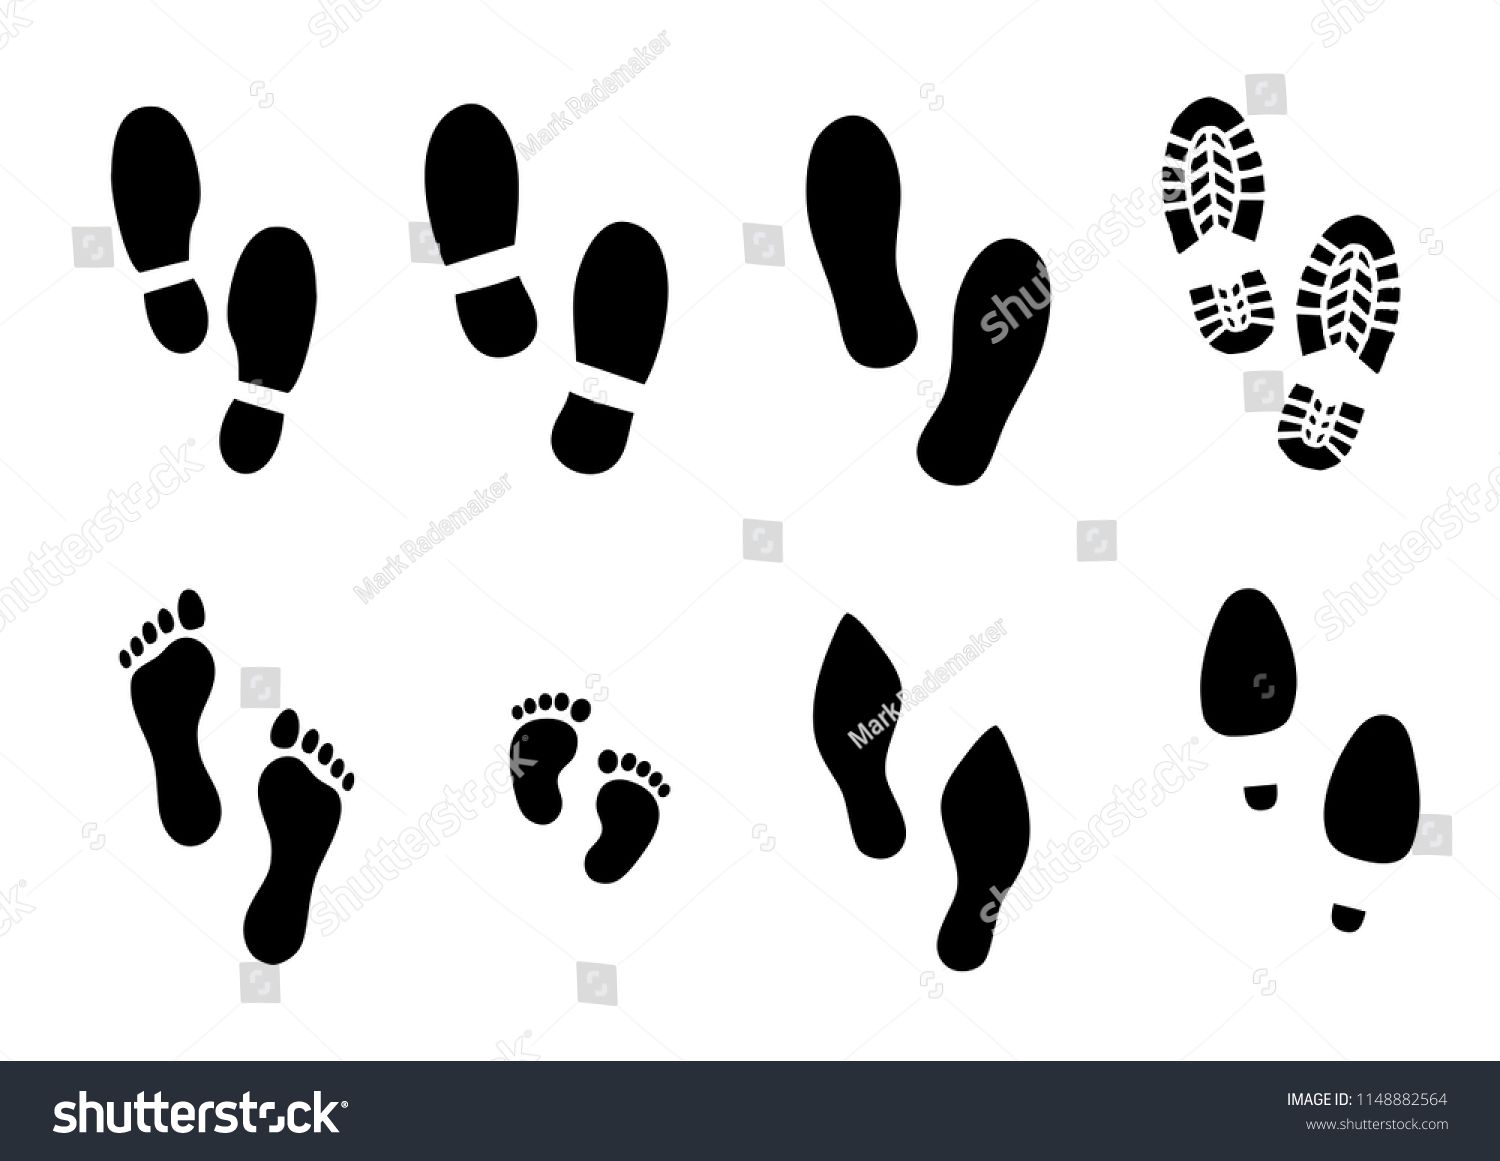 Footsteps clipart shoe soles. Footprints human shoes sole